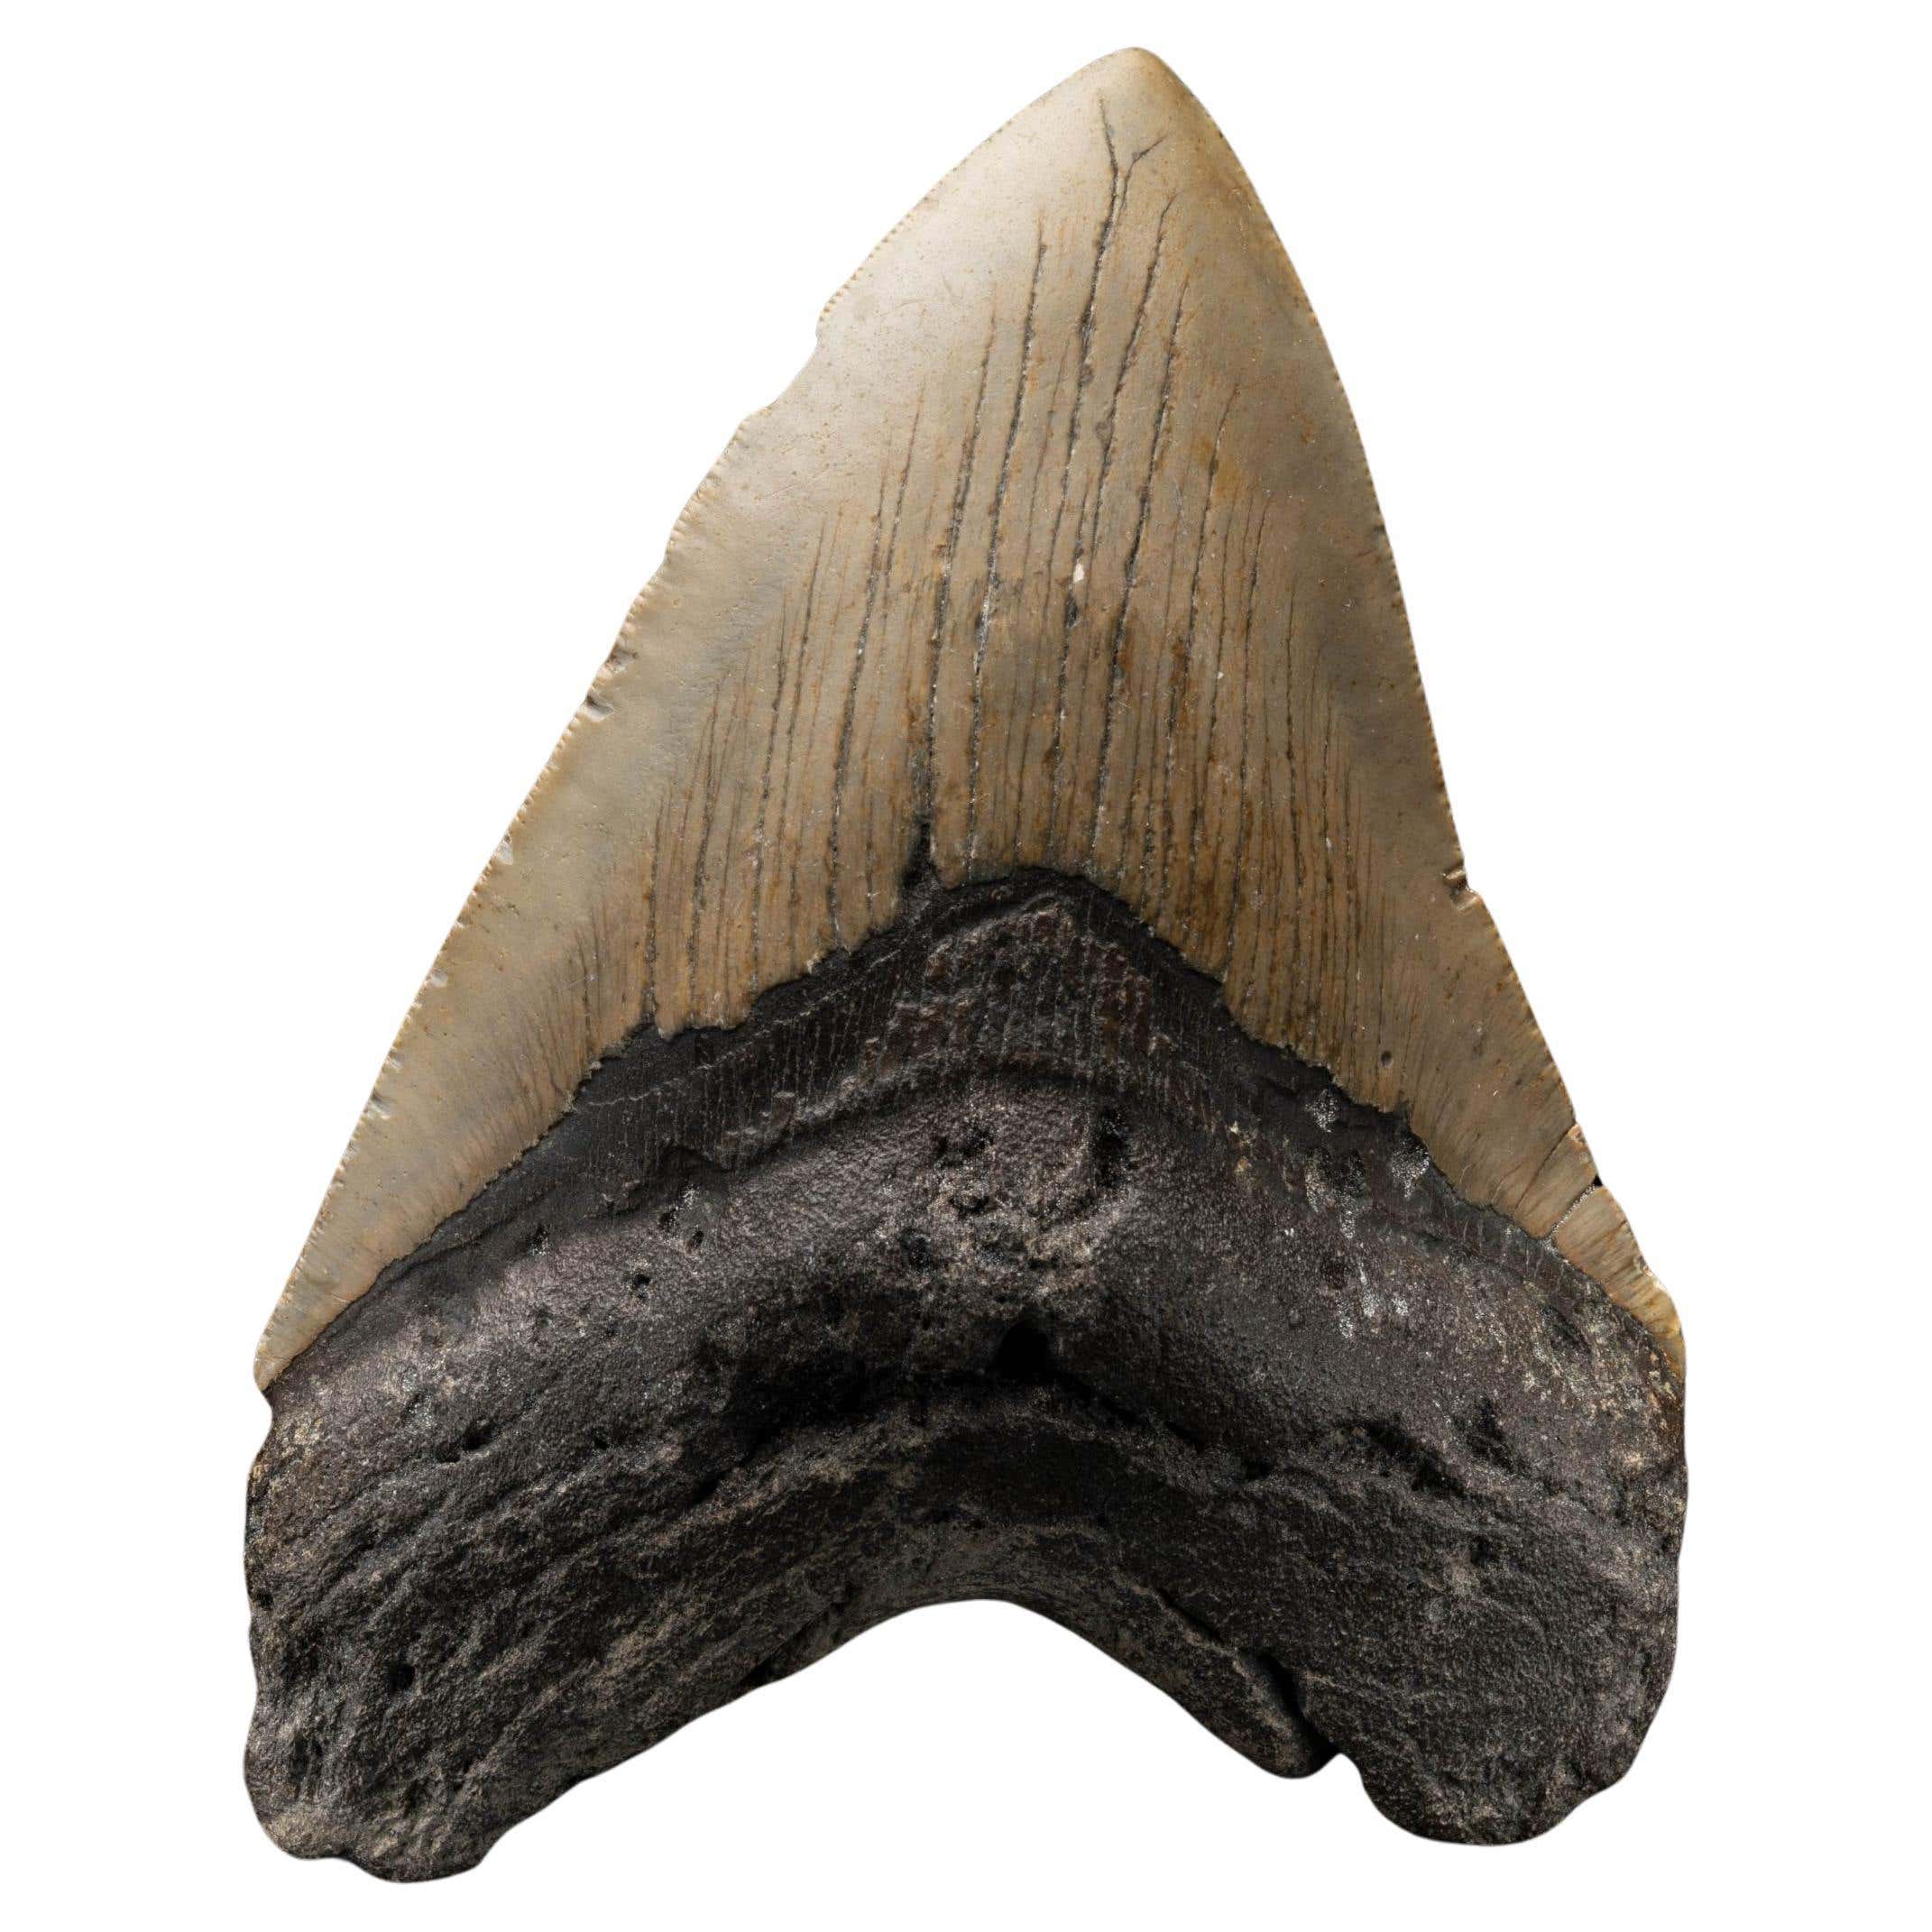 Megalodon Tooth From South Carolina, USA // 5.25" High